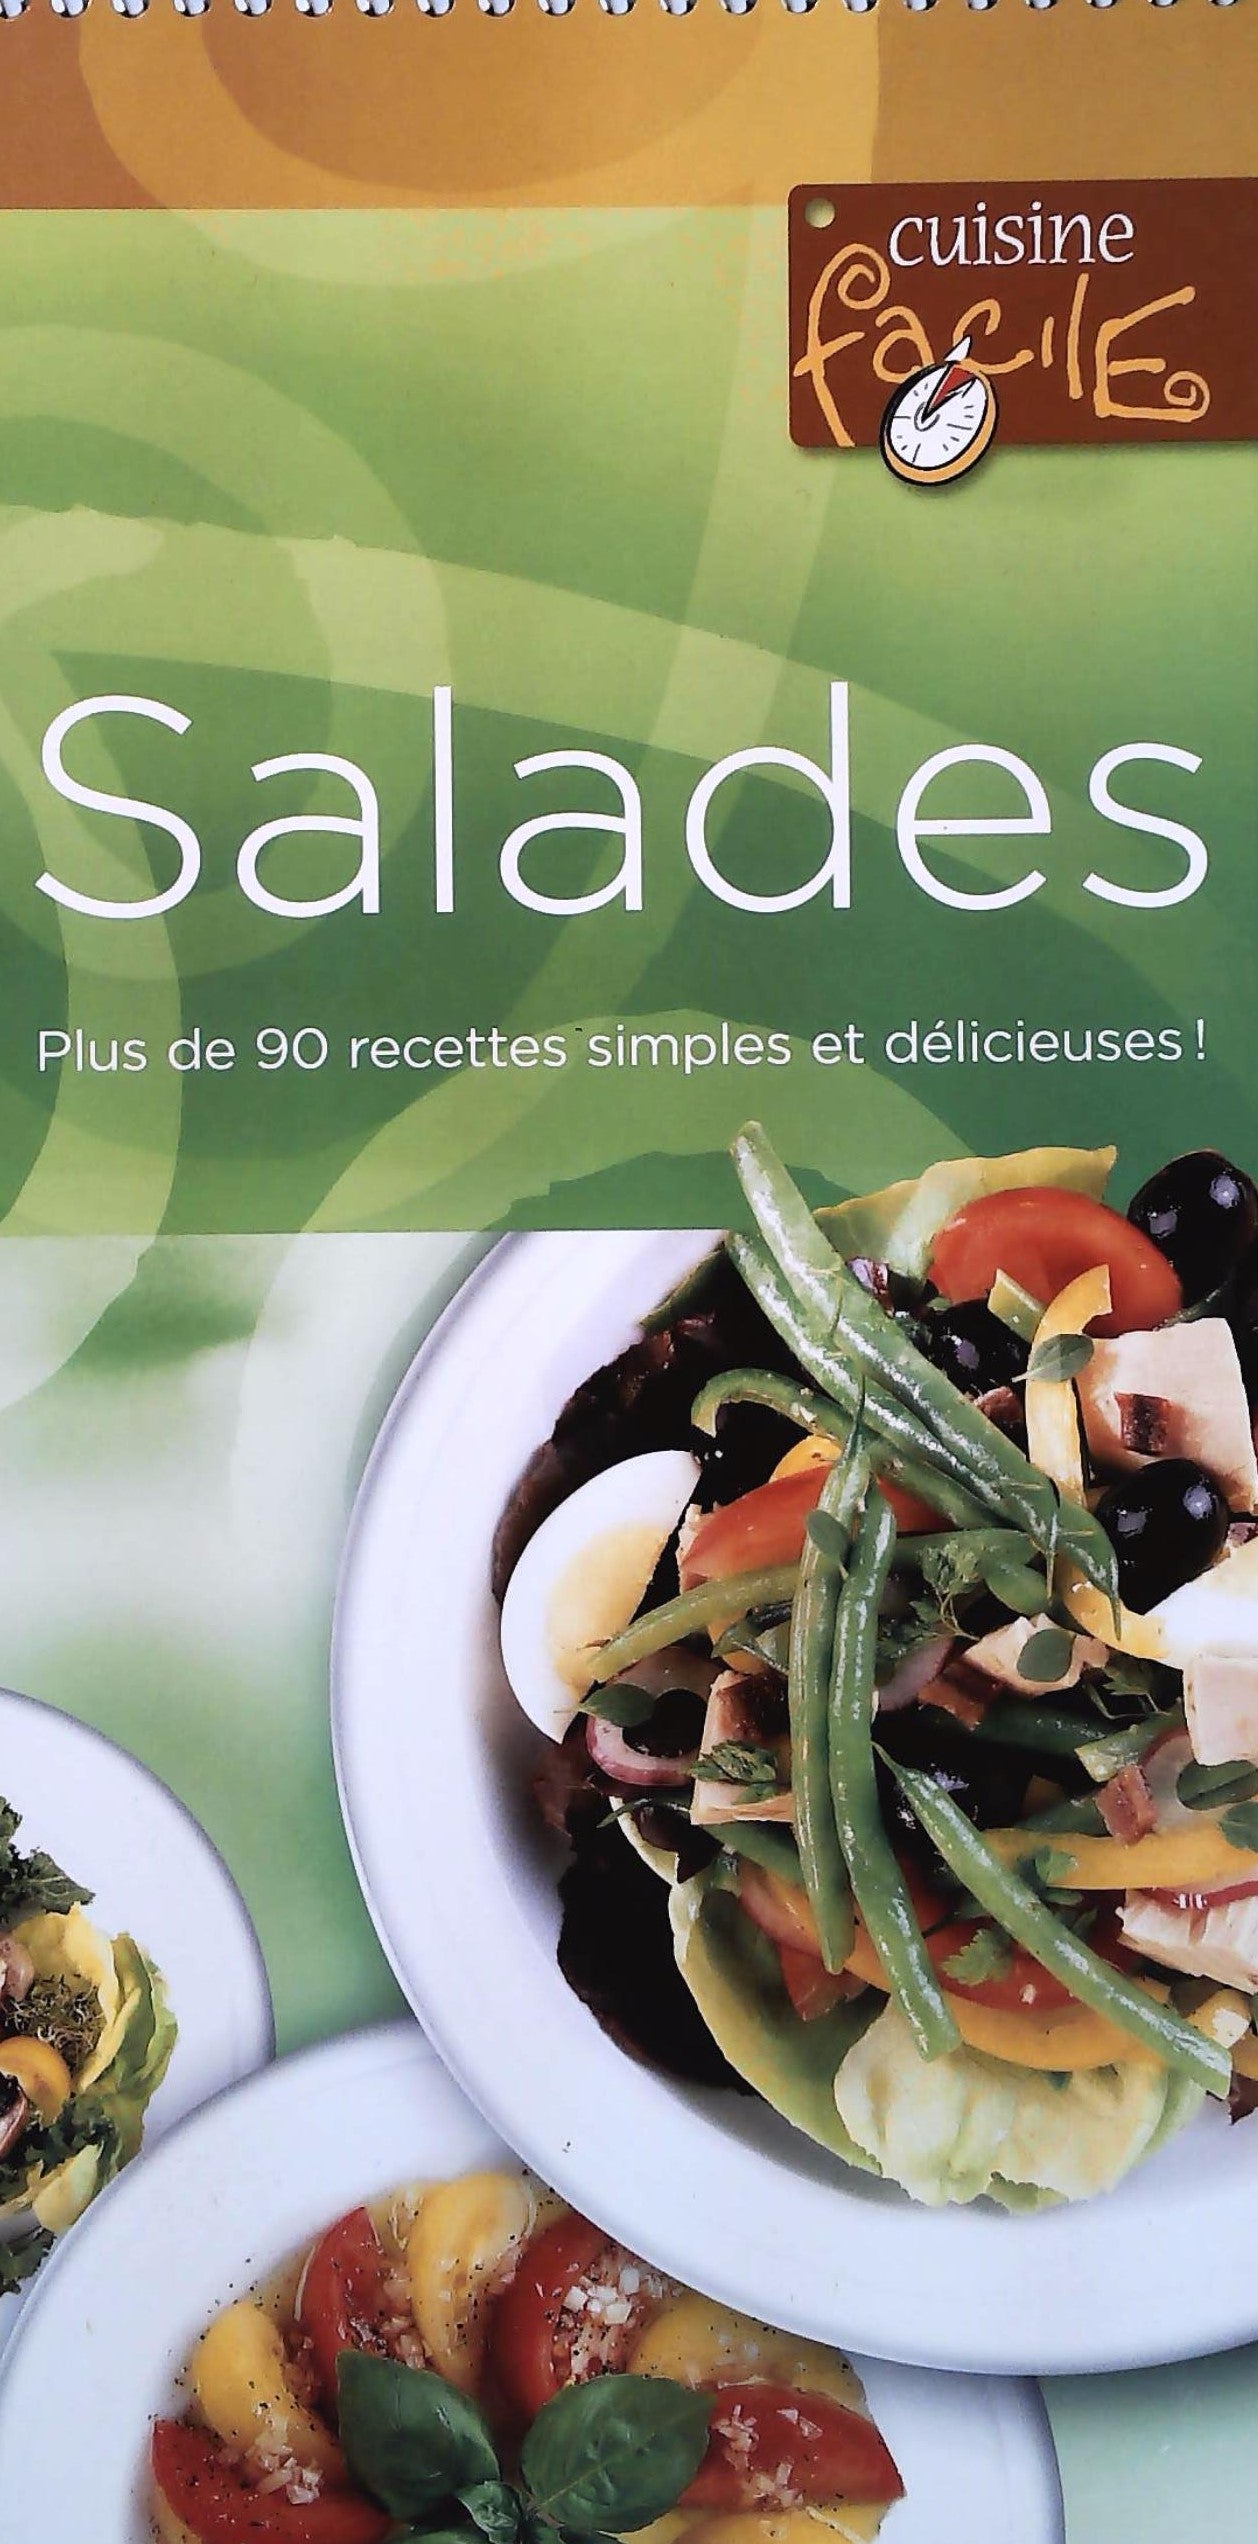 Cuisine facile : Salades